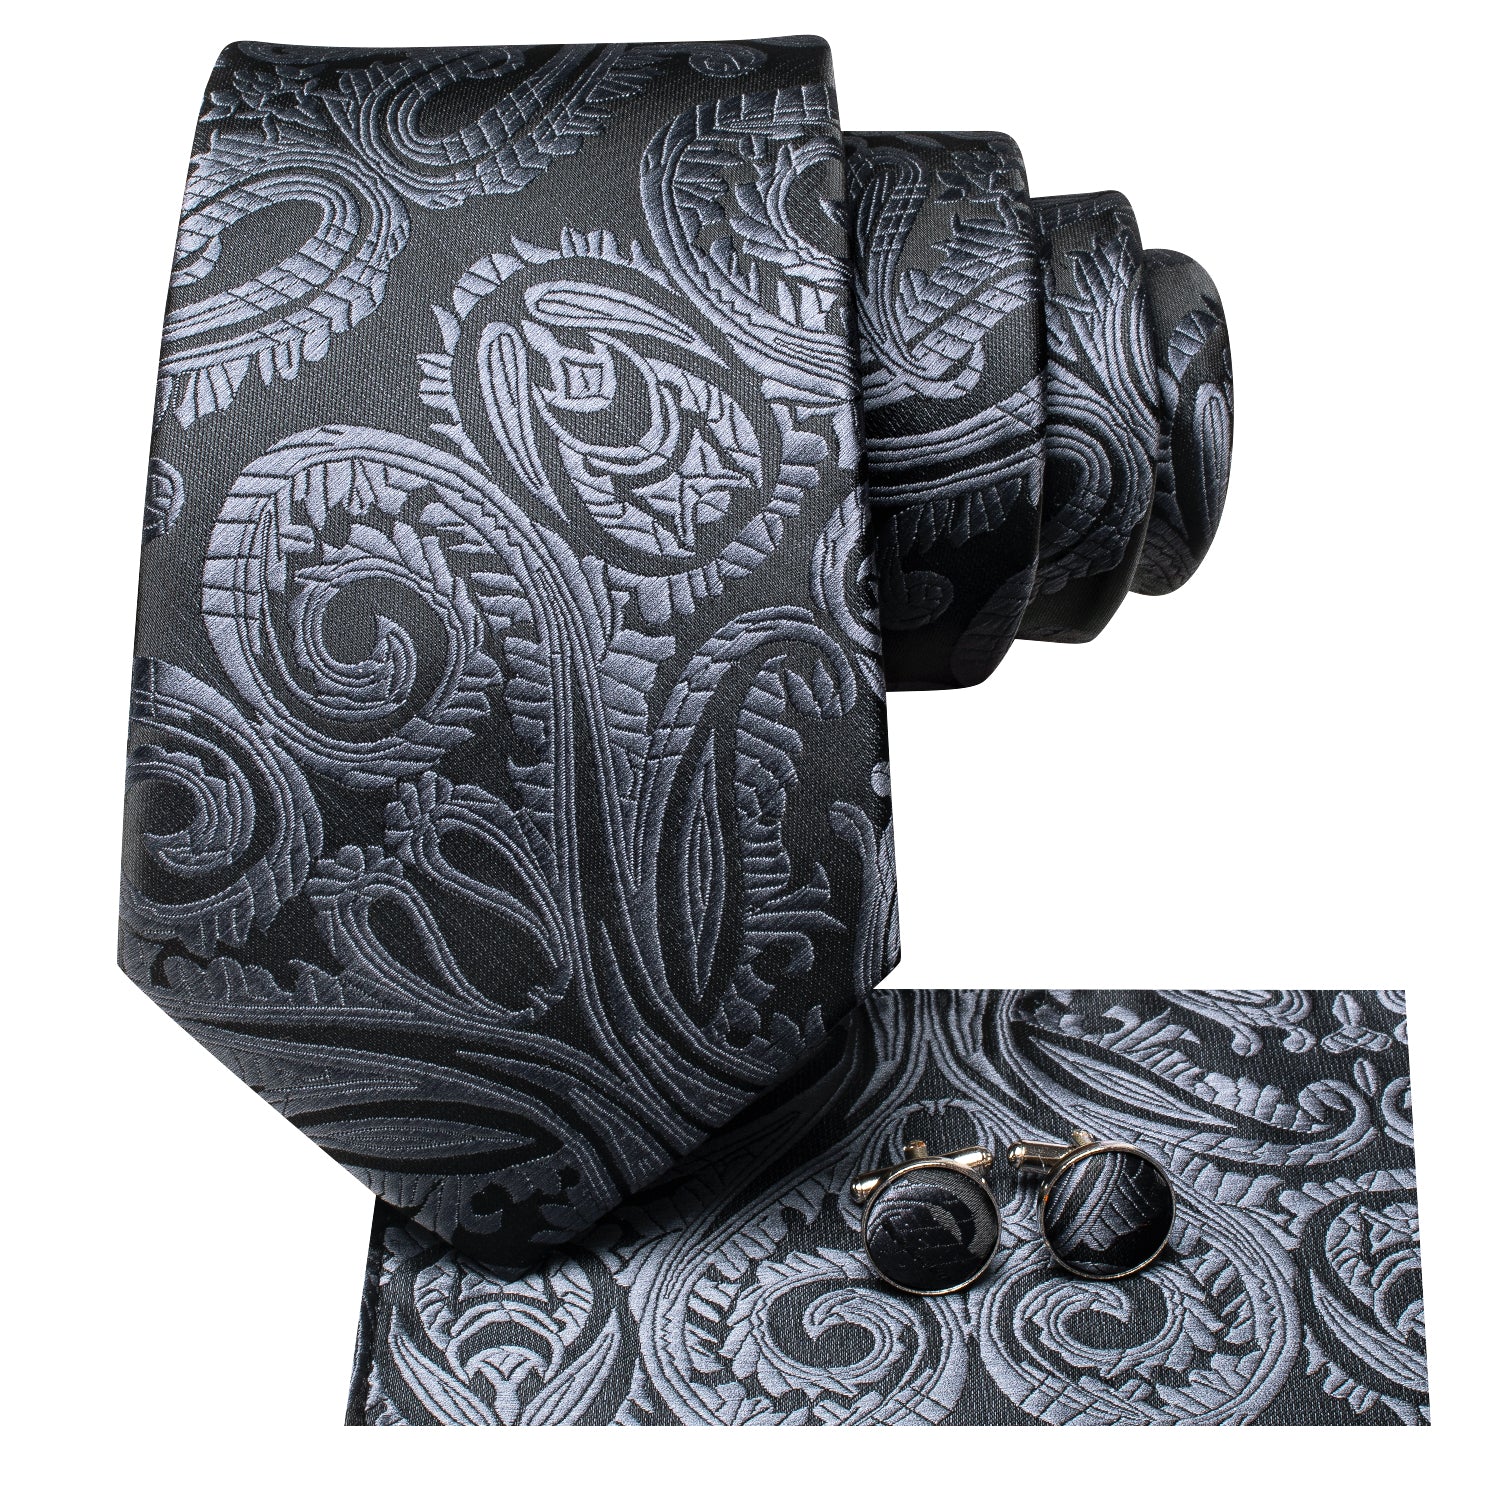 New Black Grey Paisley Tie Pocket Square Cufflinks Set